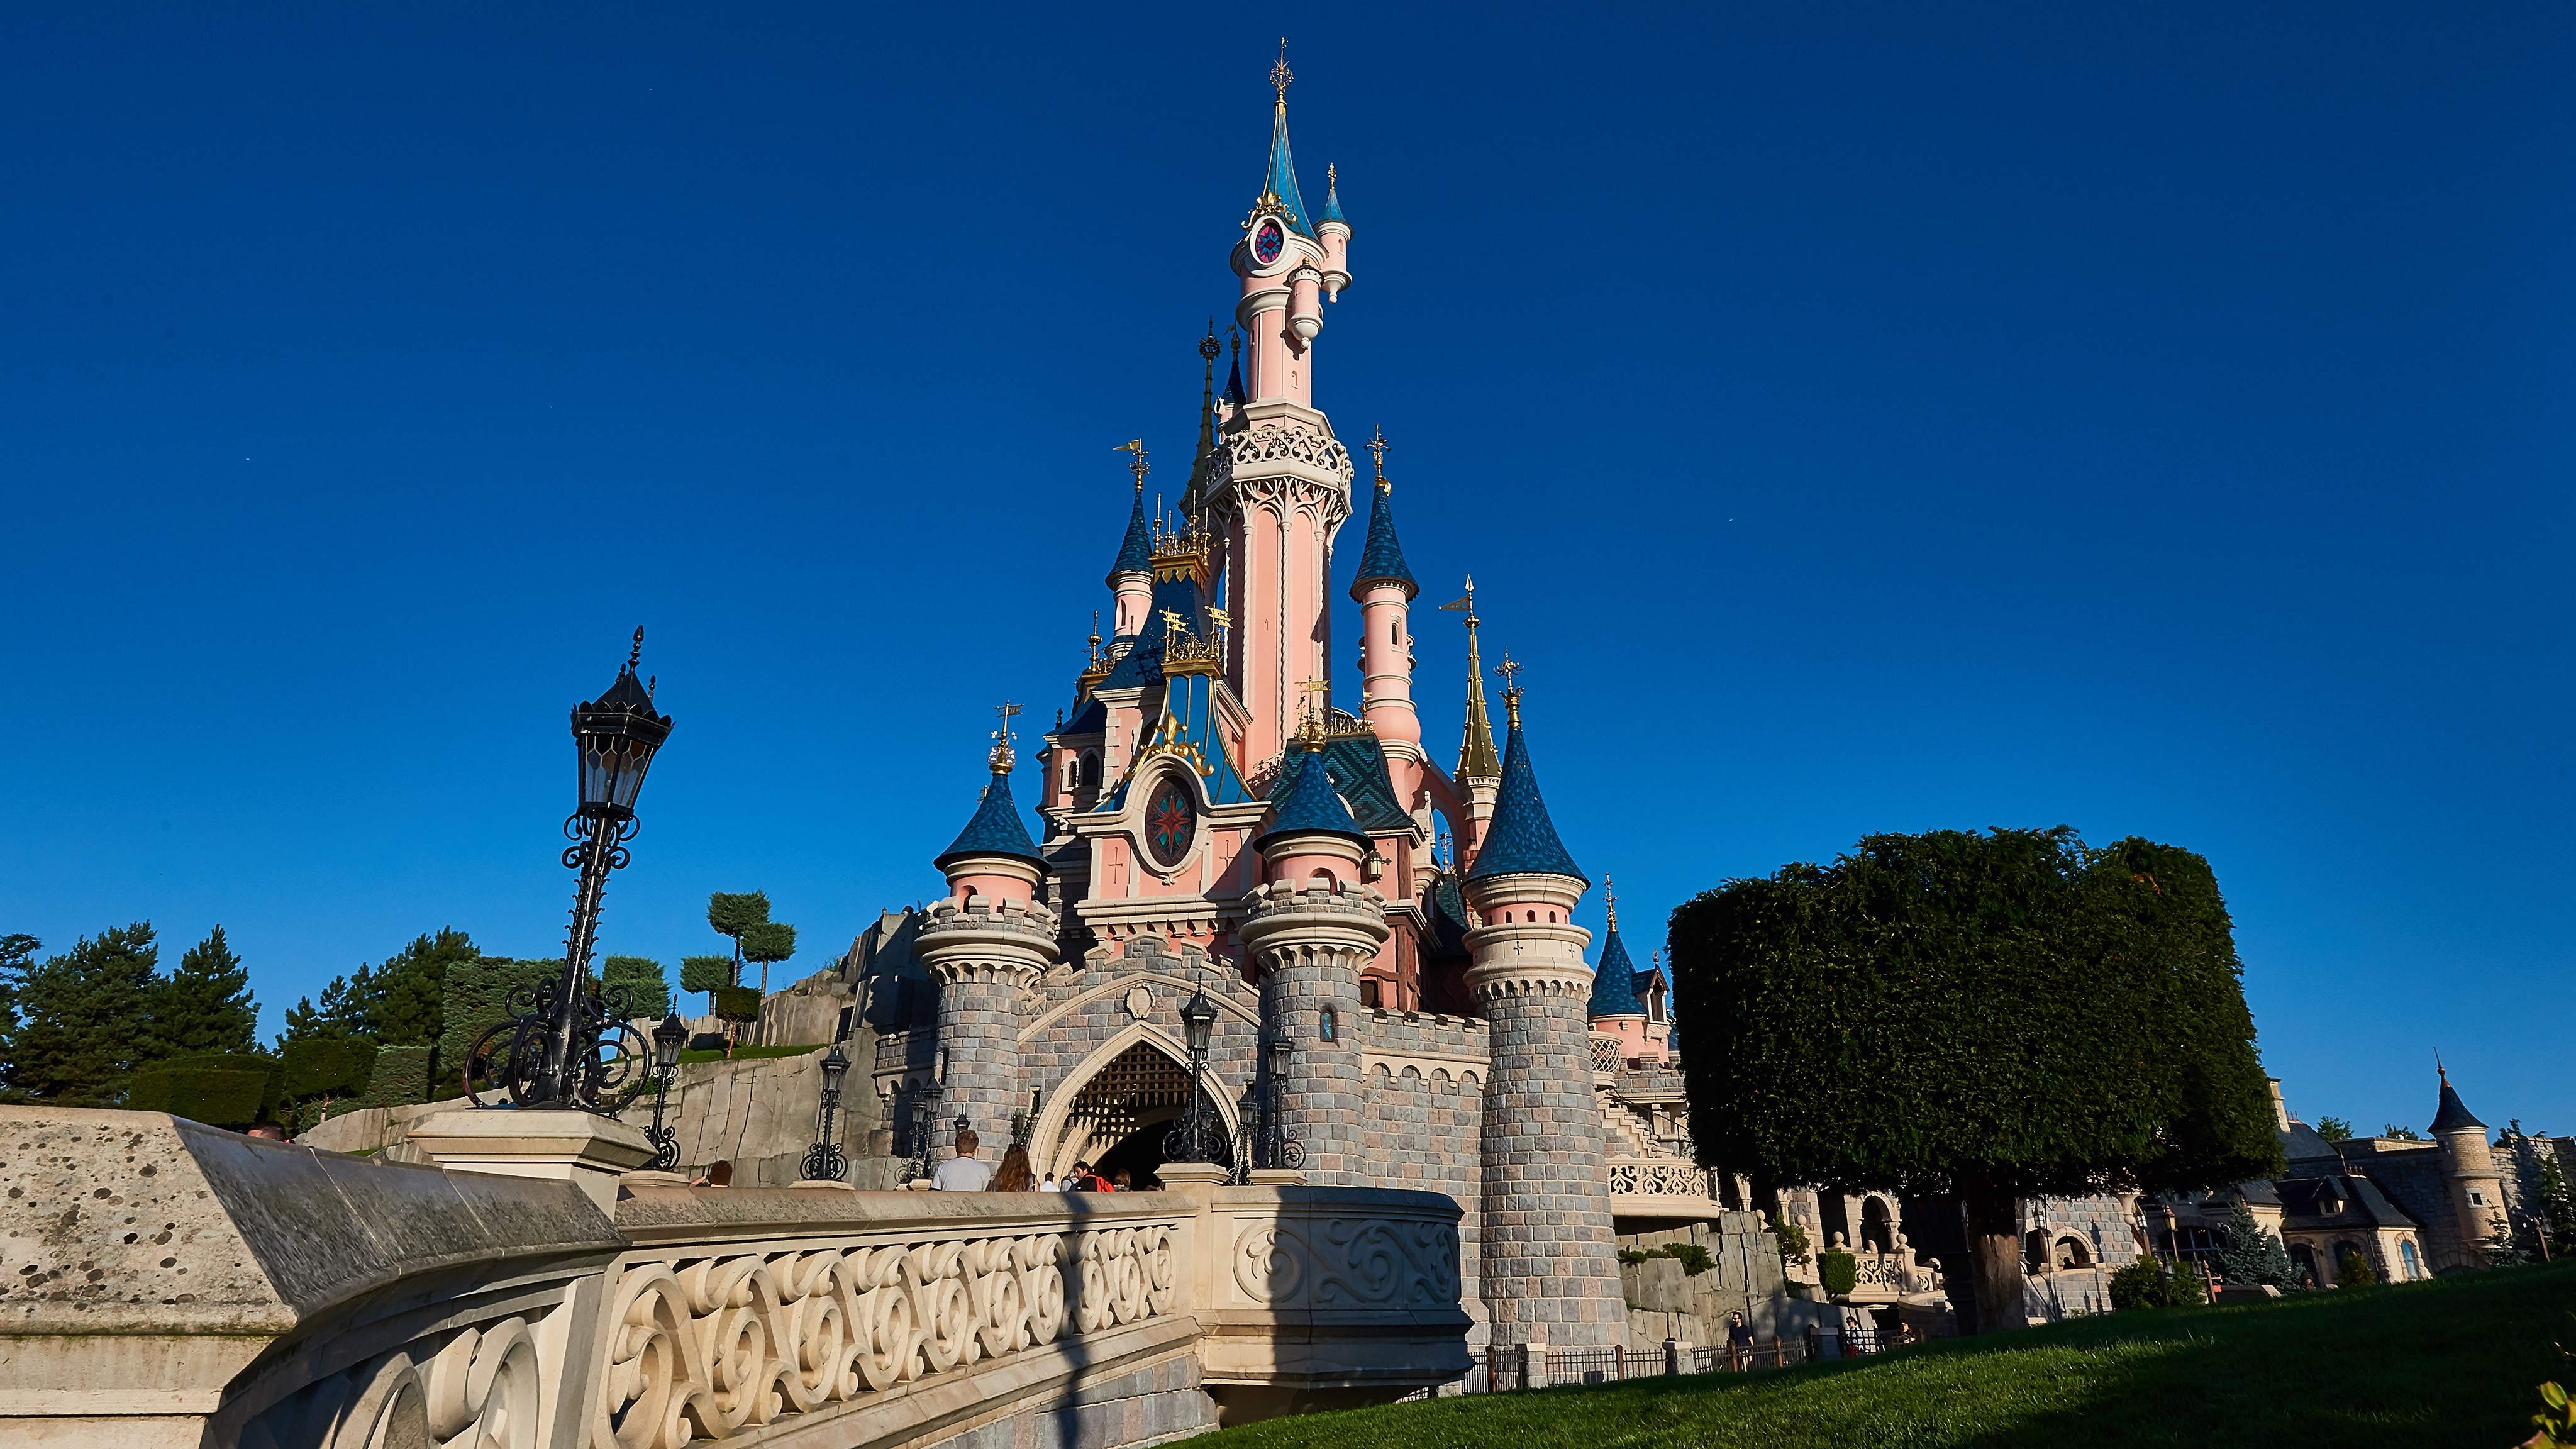 Sunrise at Sleeping Beauty's Castle, Disneyland Paris, #DisneyMagicMoments